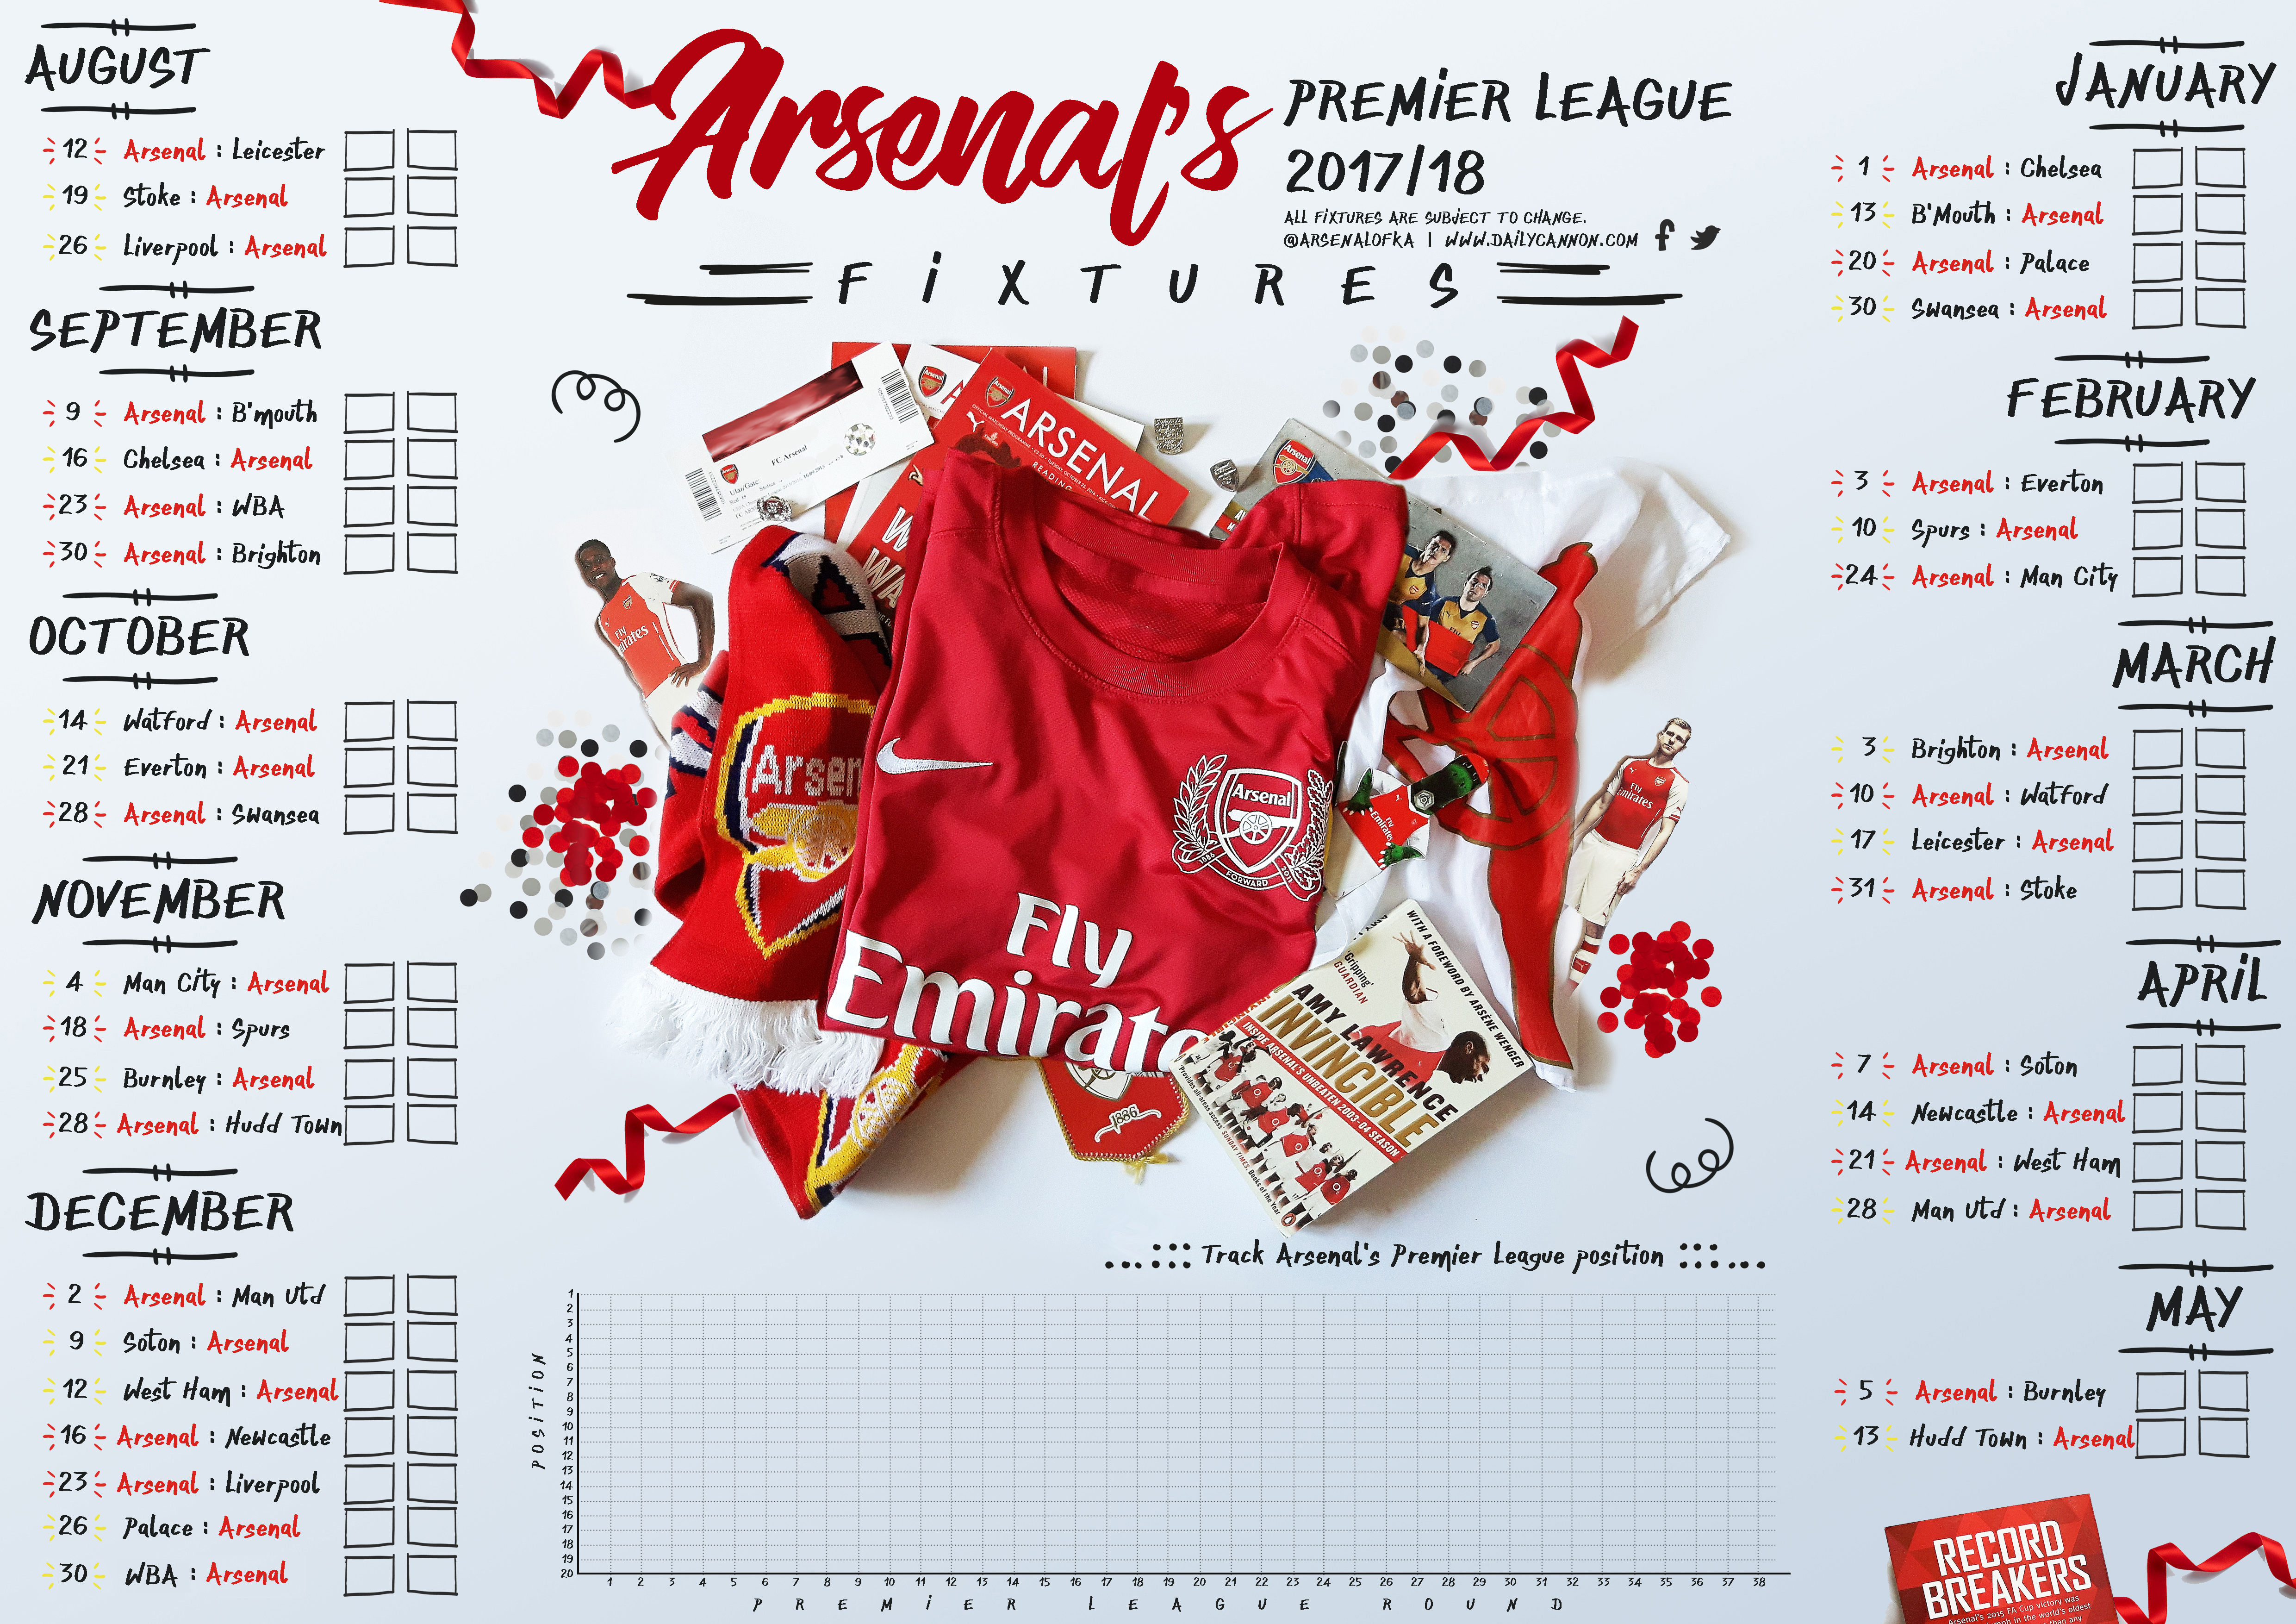 Arsenal on X: Here it is - our @premierleague schedule for 2017/18  #WeAreTheArsenal 🔴  / X